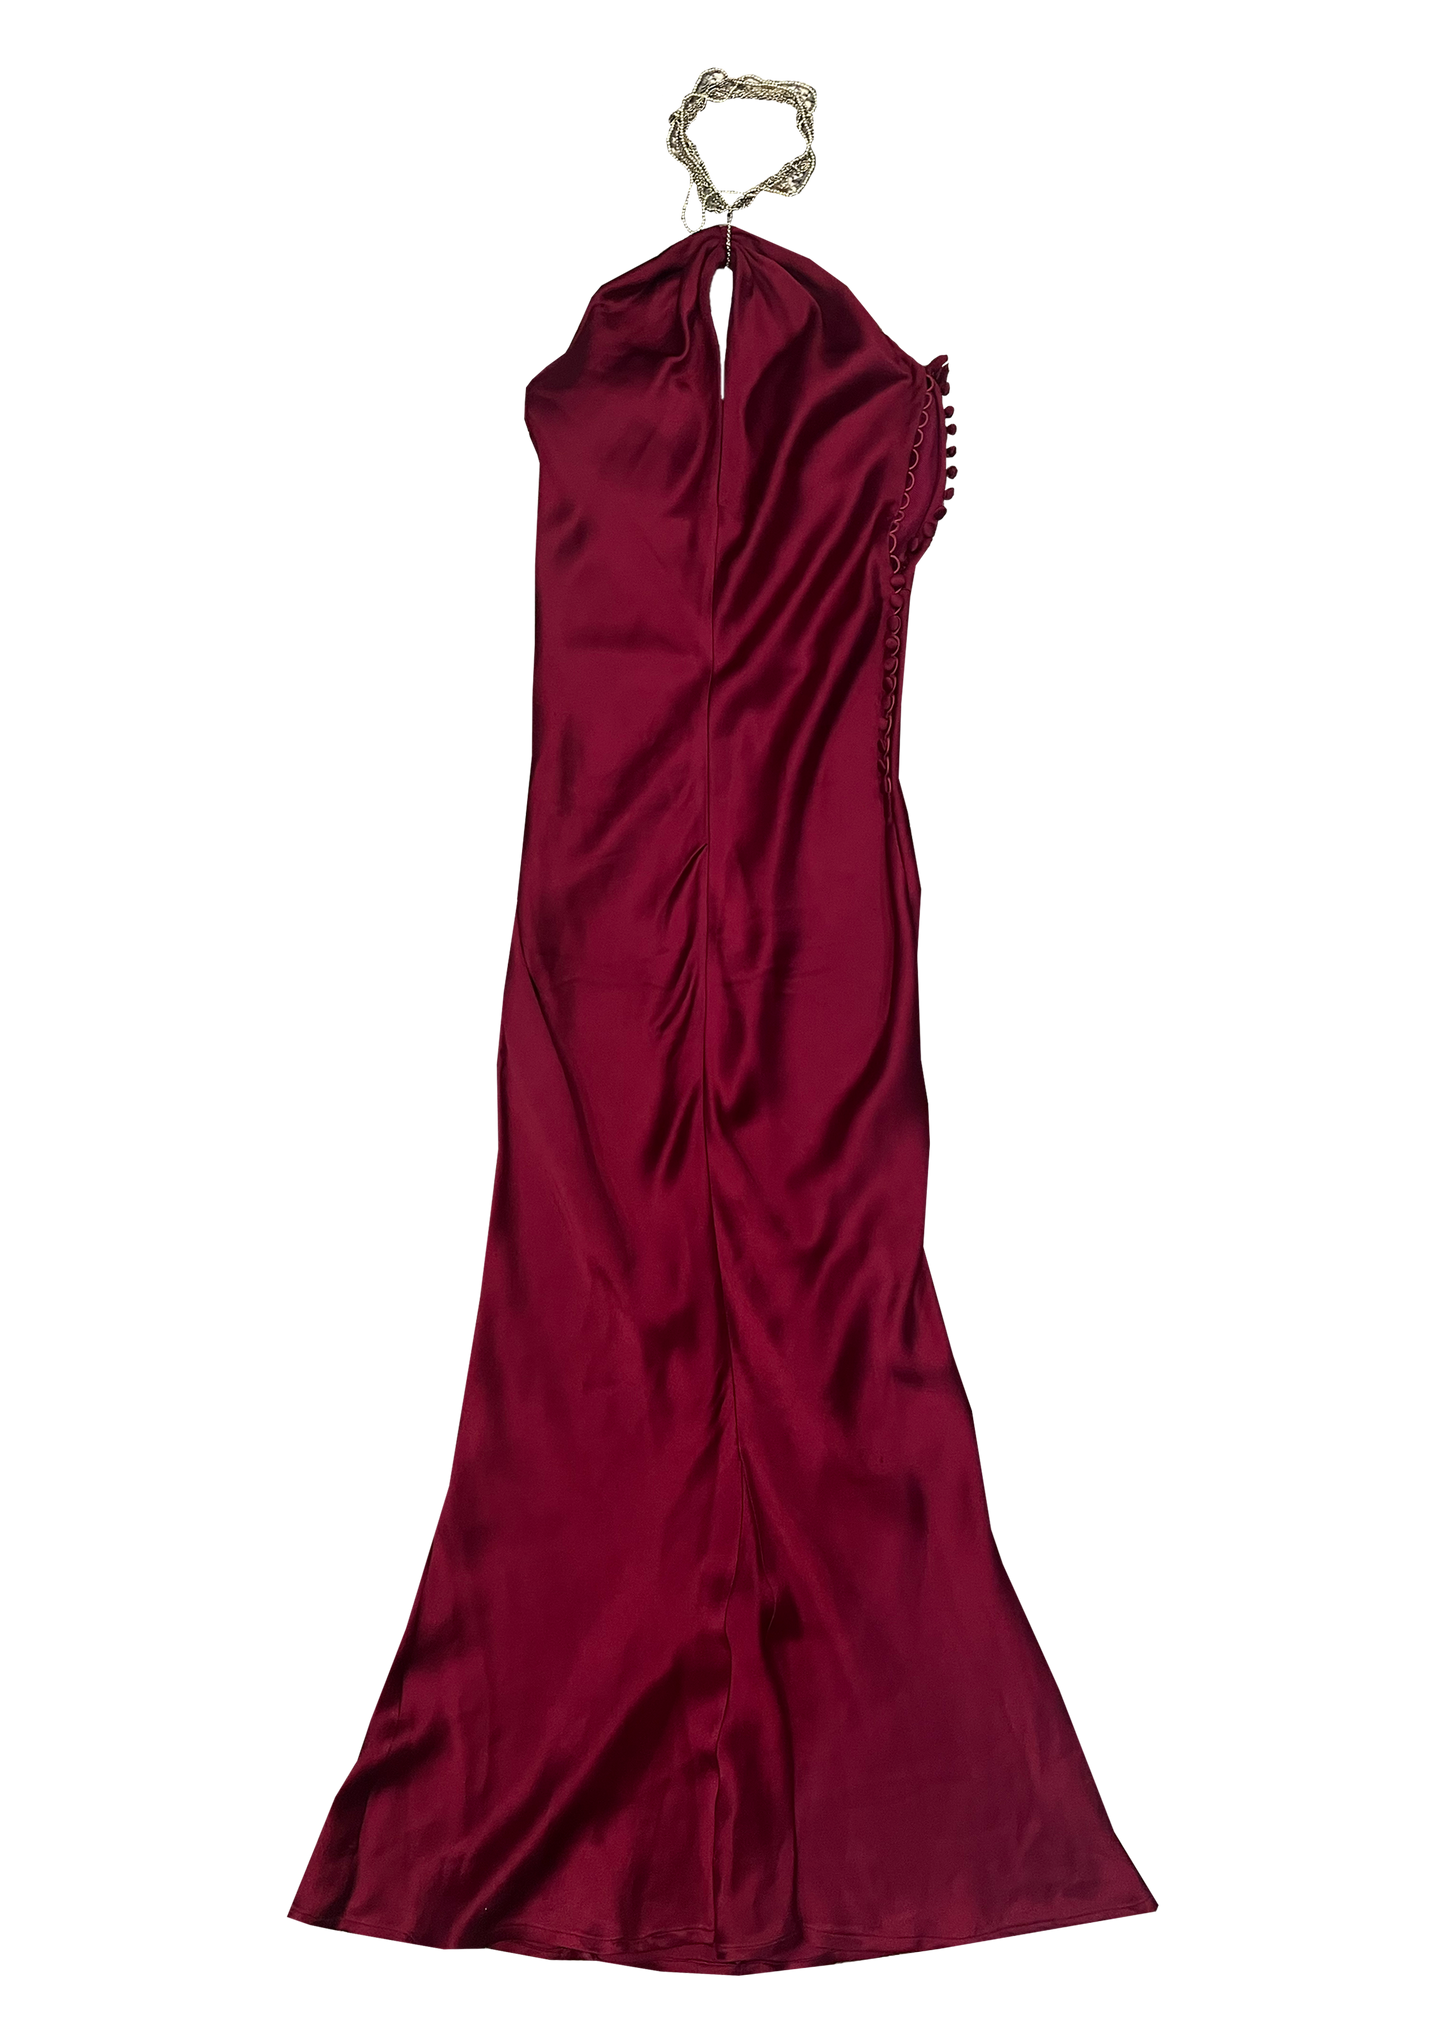 Dior dress